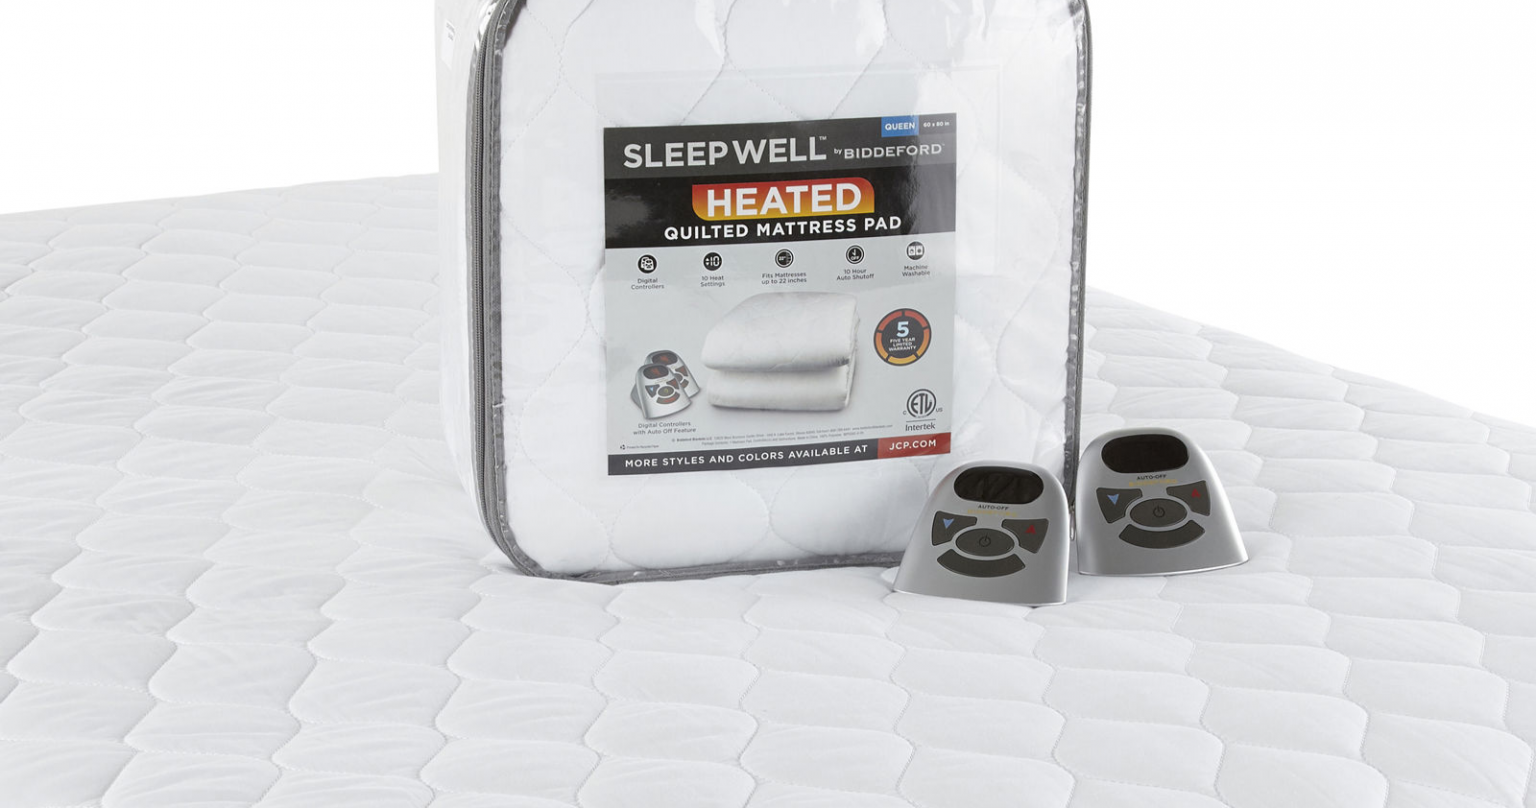 biddeford quilted heated mattress pad reviews